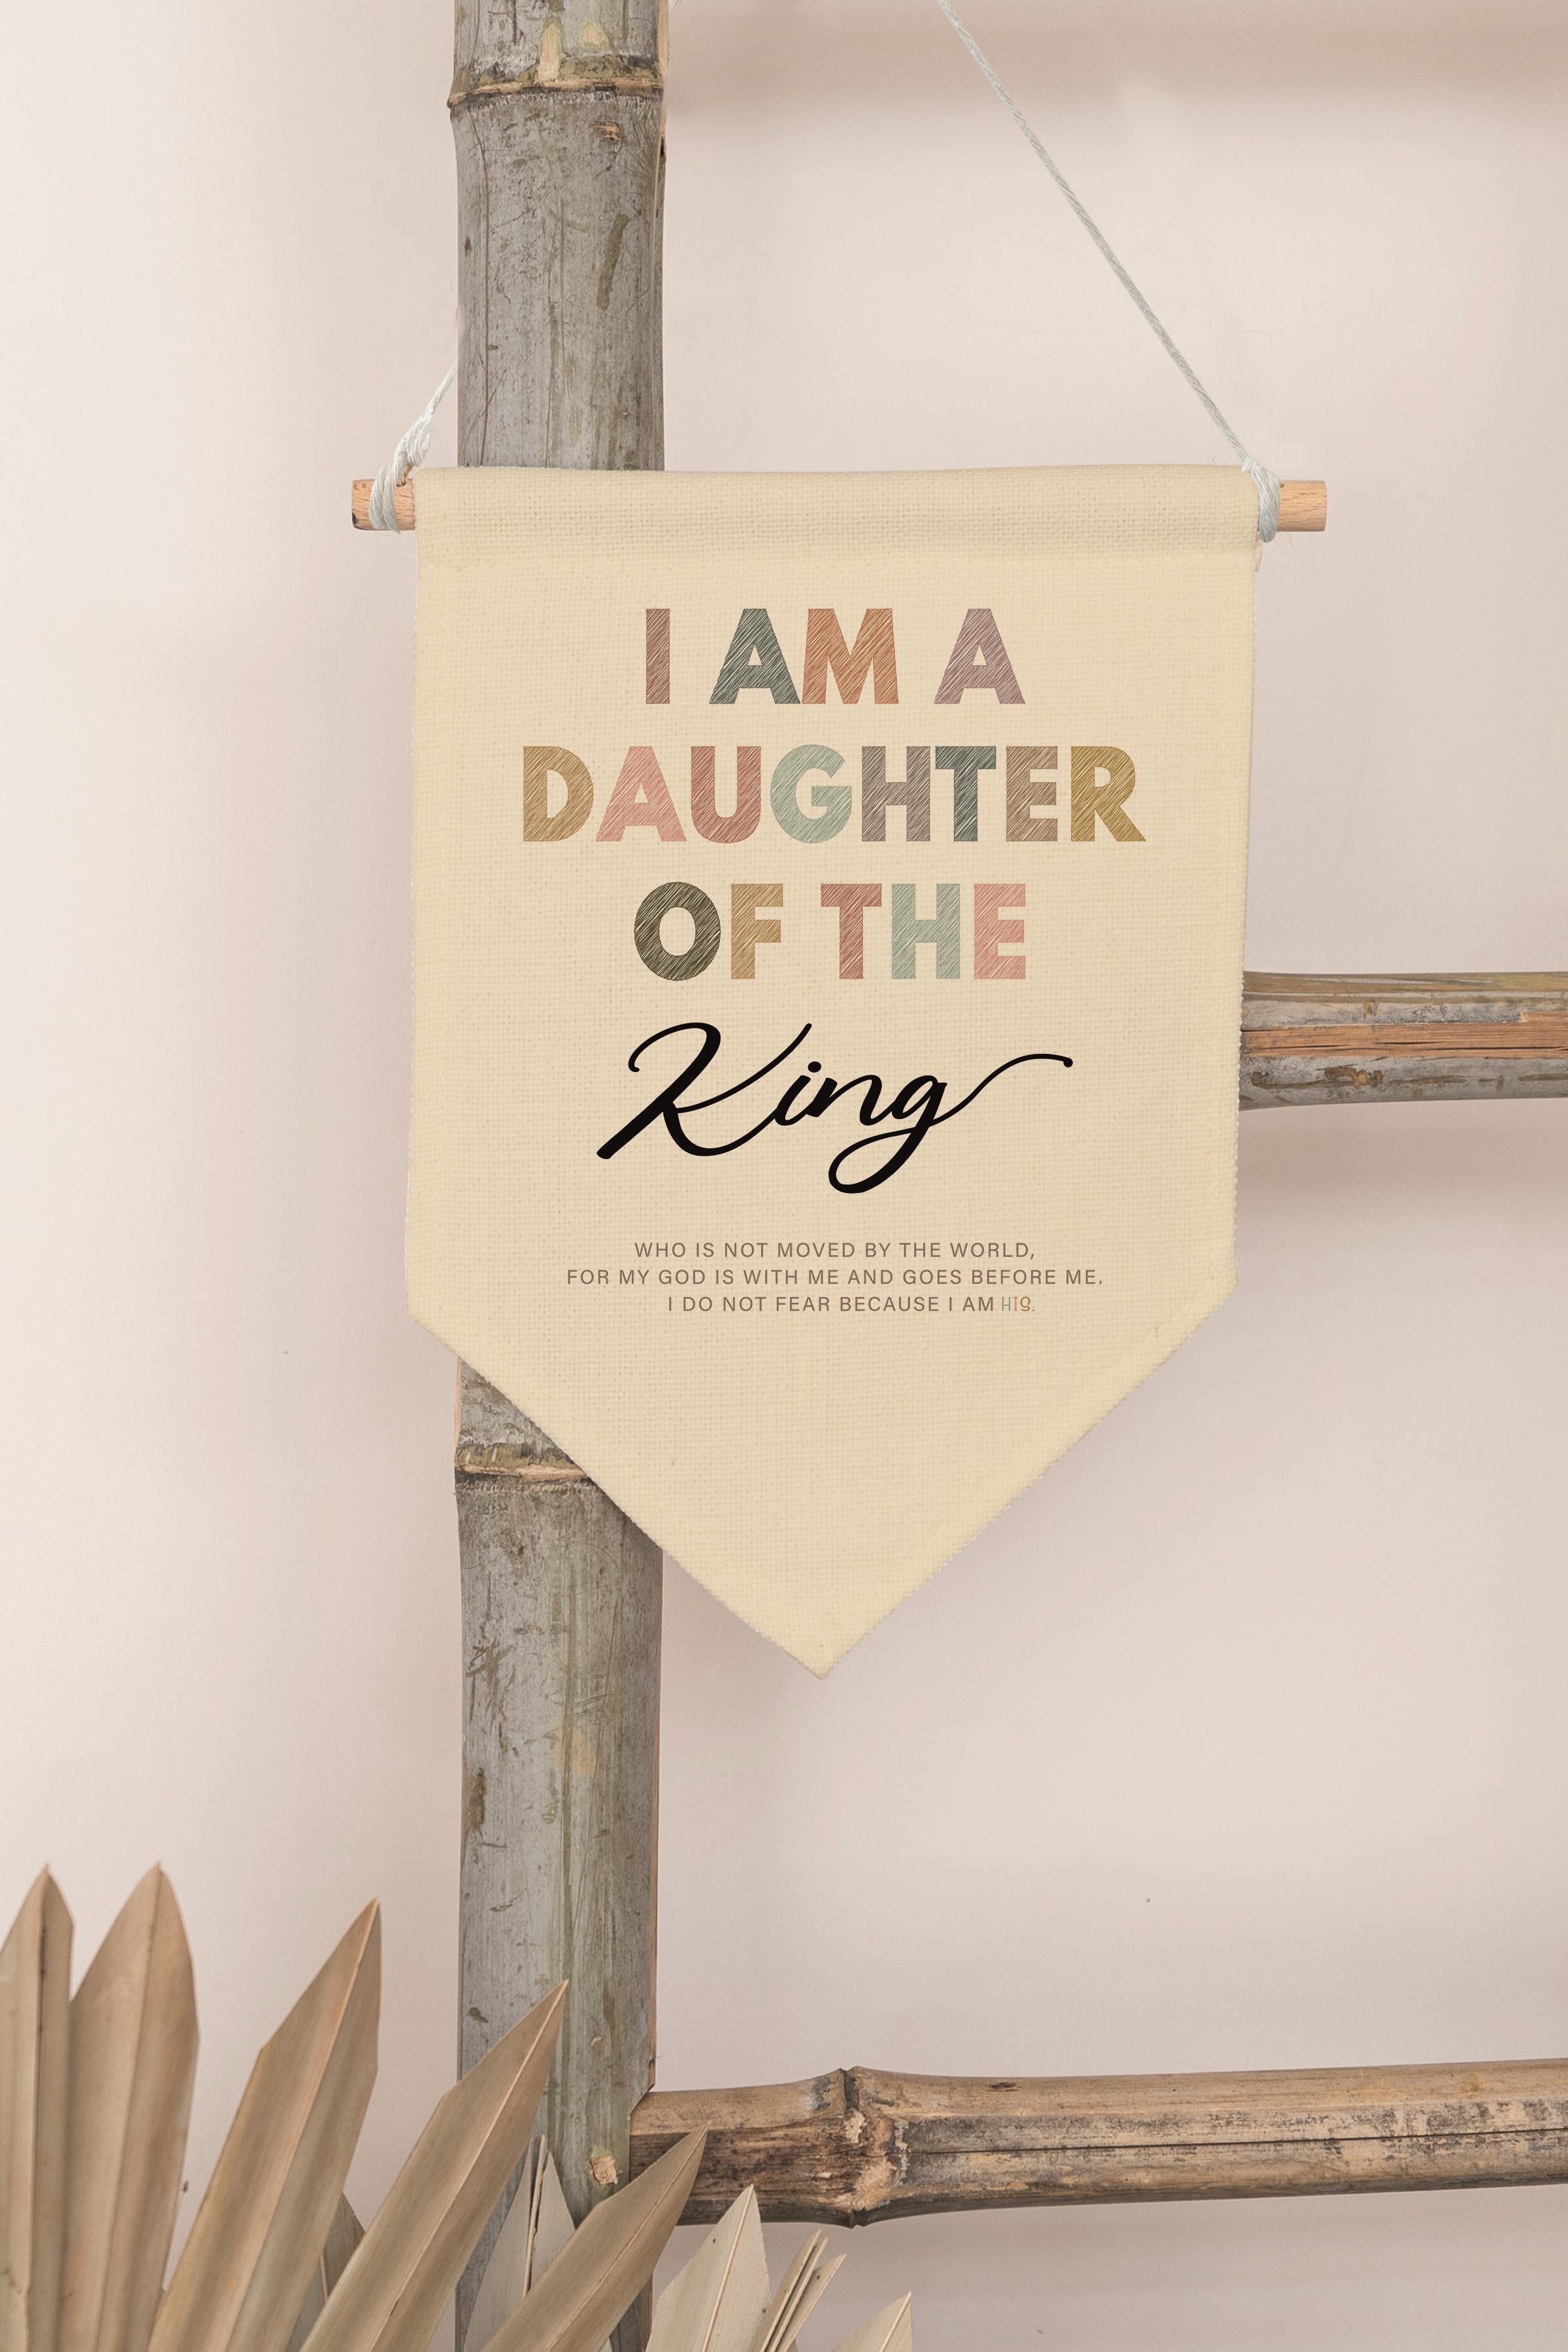 Çocuk Odası Dekor, Duvar Süsü, Ahşap Bebek Odası Dekor, Canvas Flama, I Am a Daughter of the King